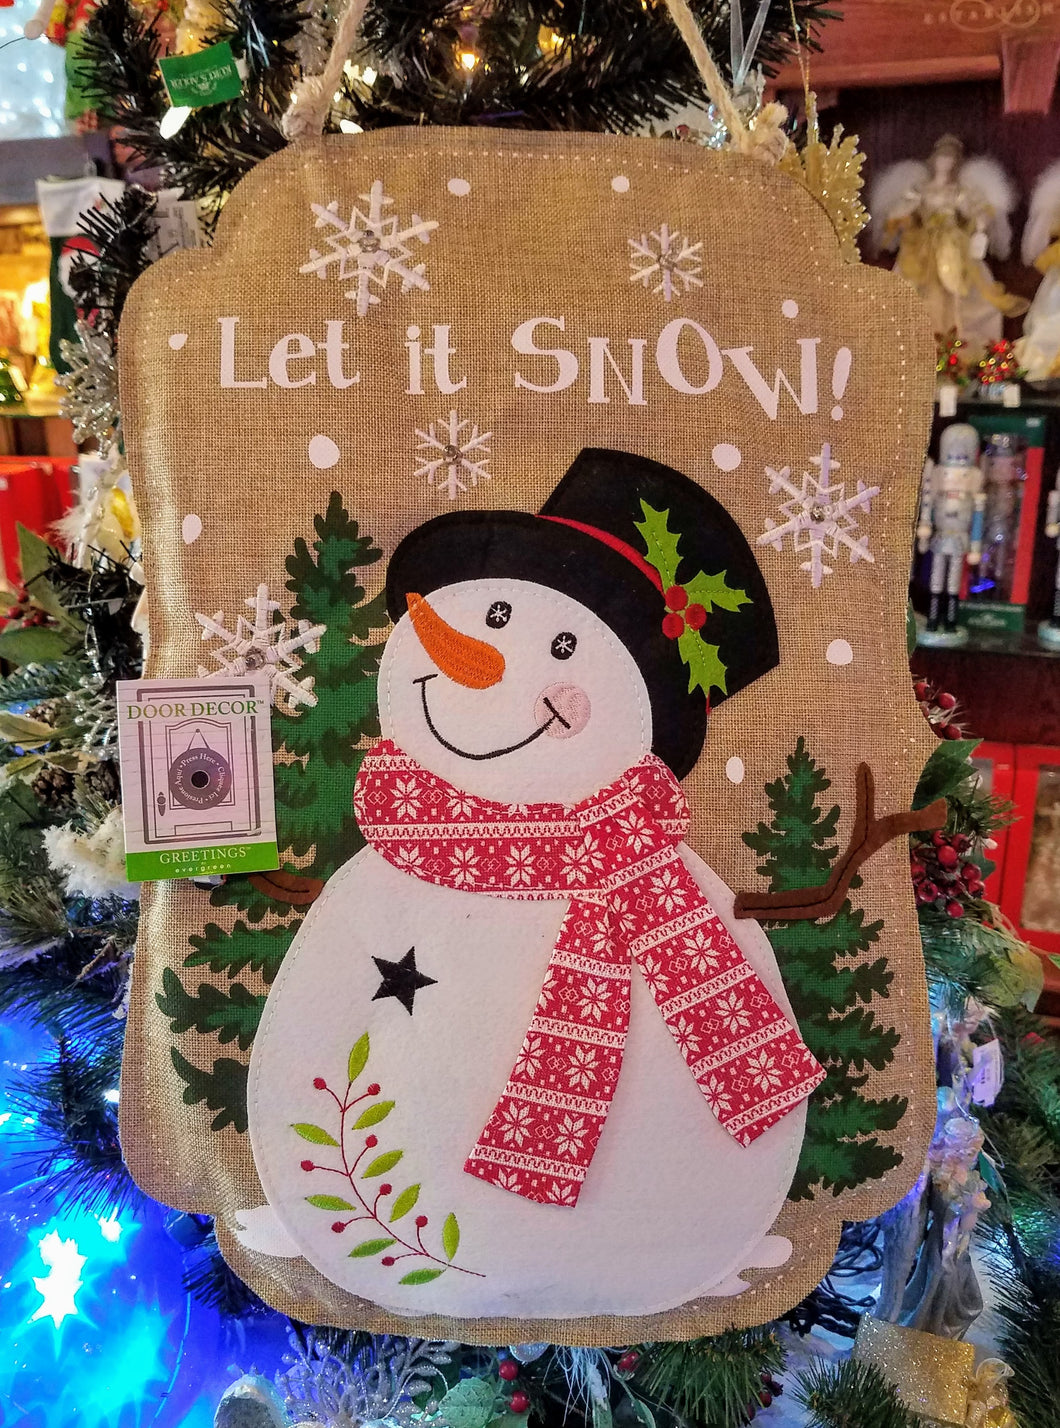 Let it snow burlap wall decor w snowman/trees lights up 19